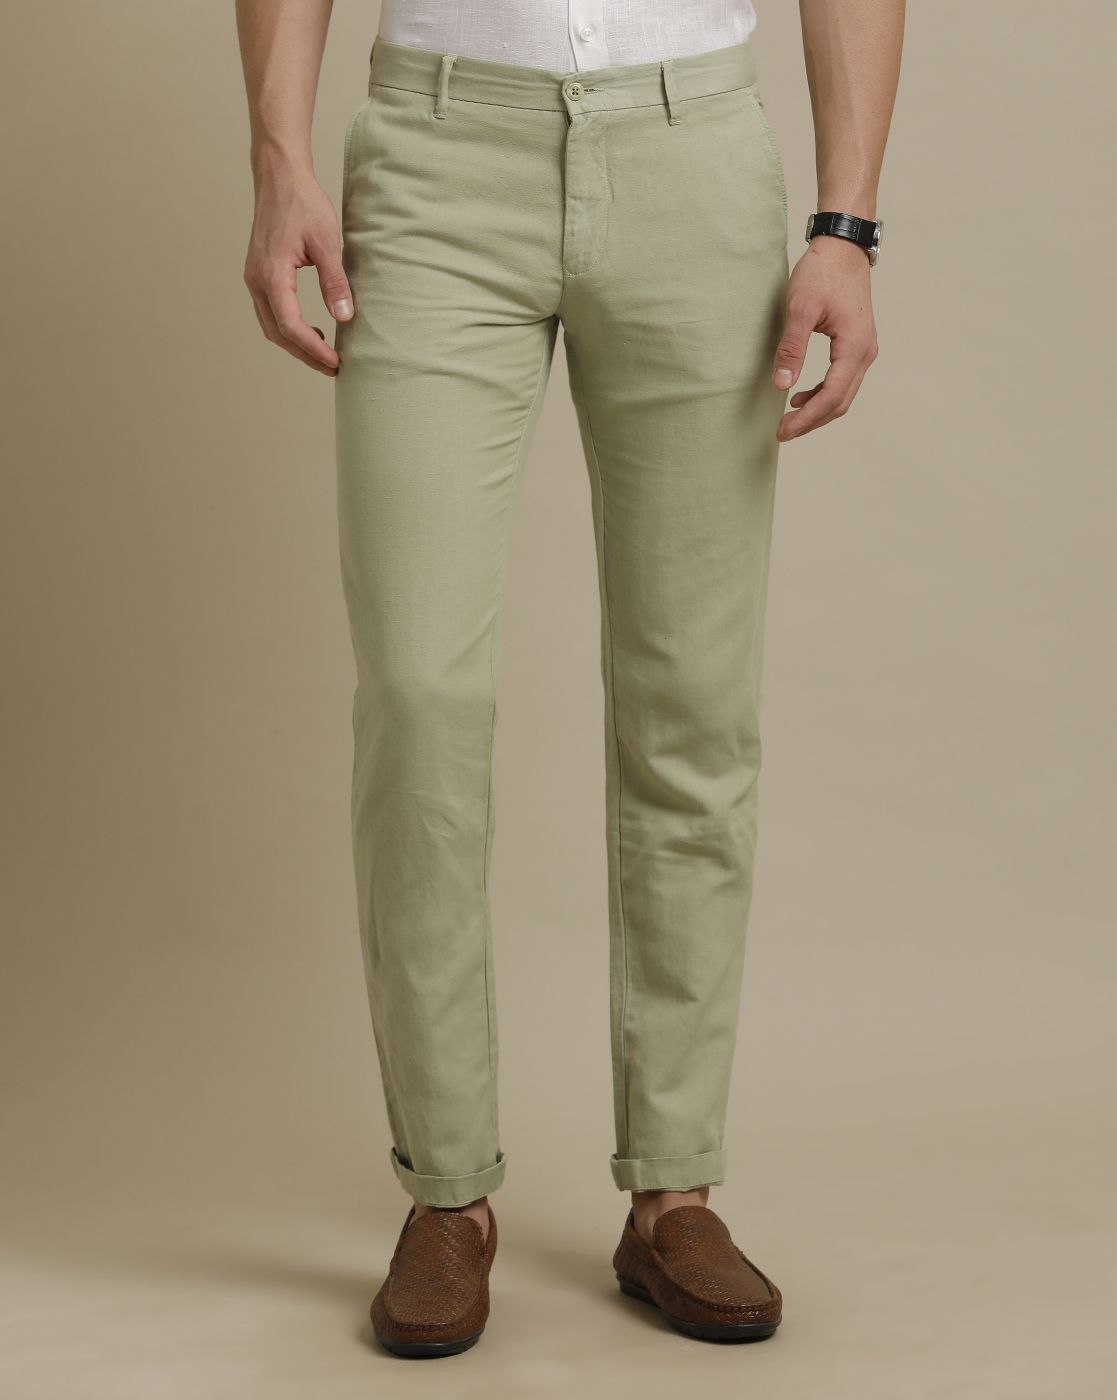 Buy Malvina Men's Cotton Slim fit Cargo Pant (Green, 30) at Amazon.in